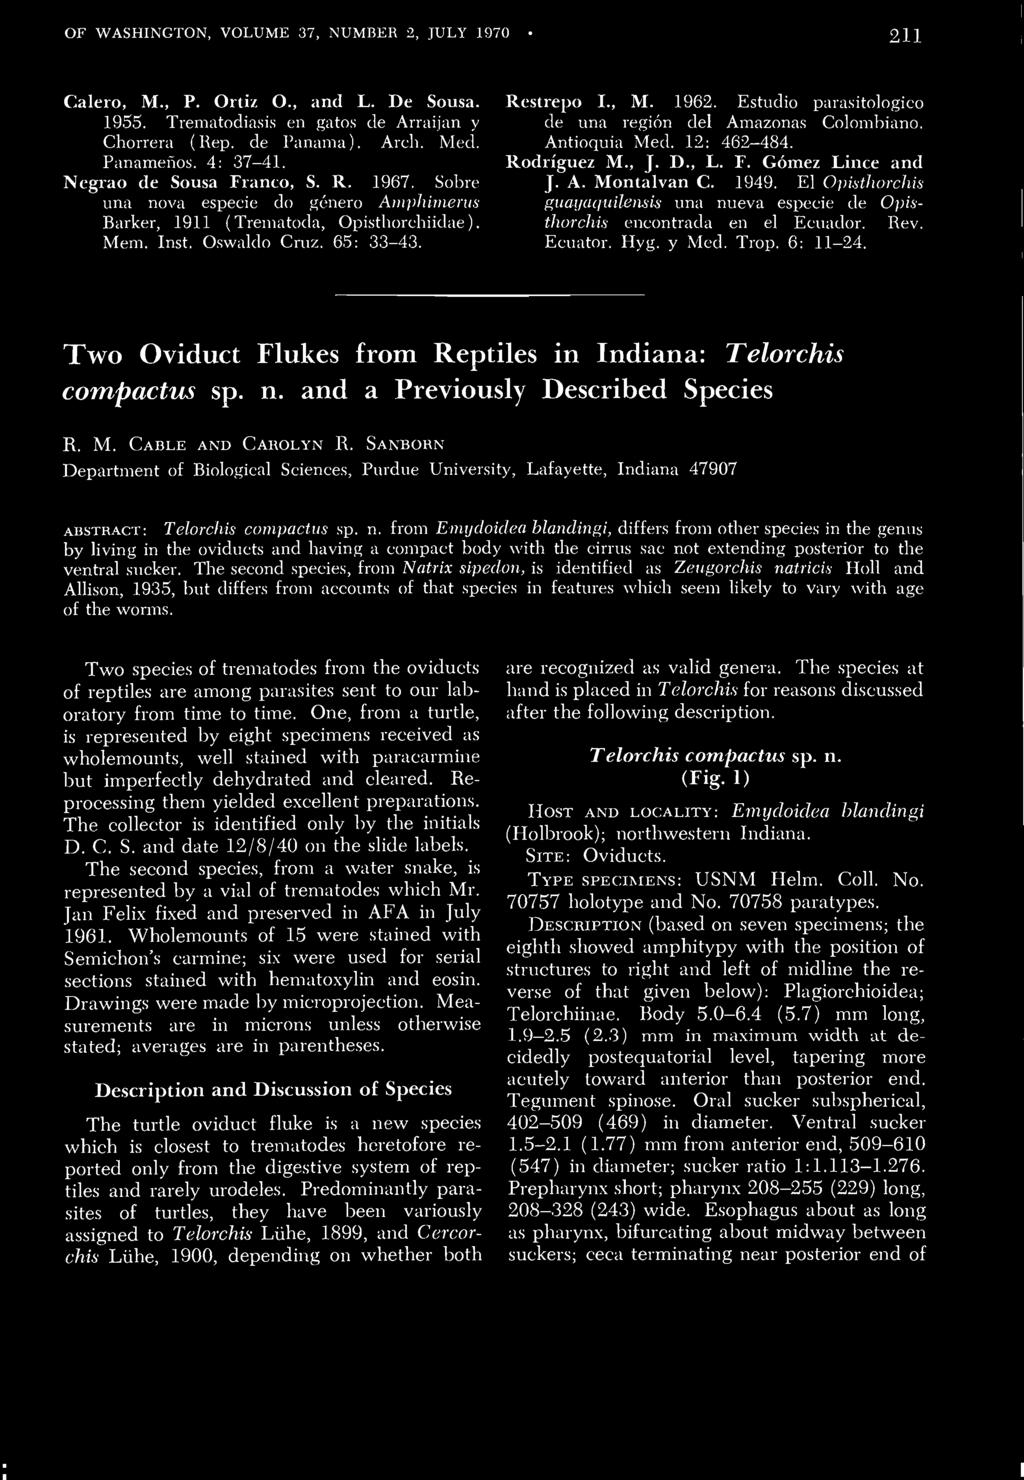 Estudio parasitologico de una region del Amazonas Colombiano. Antioquia Med. 12: 462-484. Rodriguez M., J. D., L. F. Gomez Lince and J. A. Montalvan C. 1949.